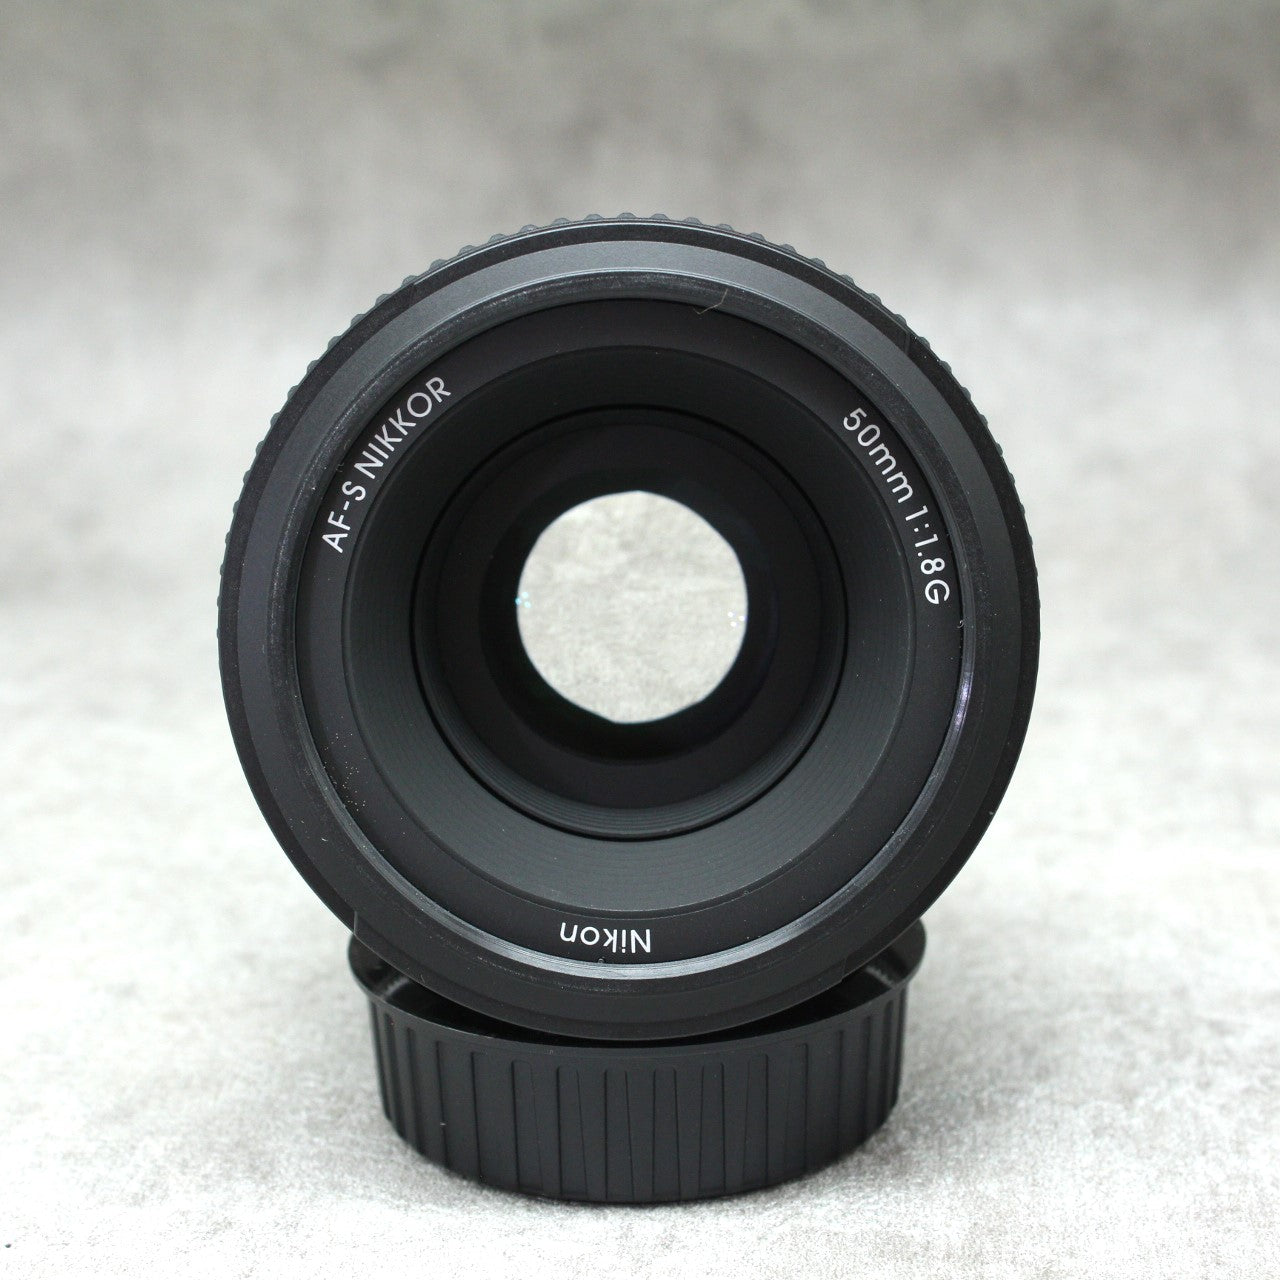 Nikon Lens 50mm f1.8G